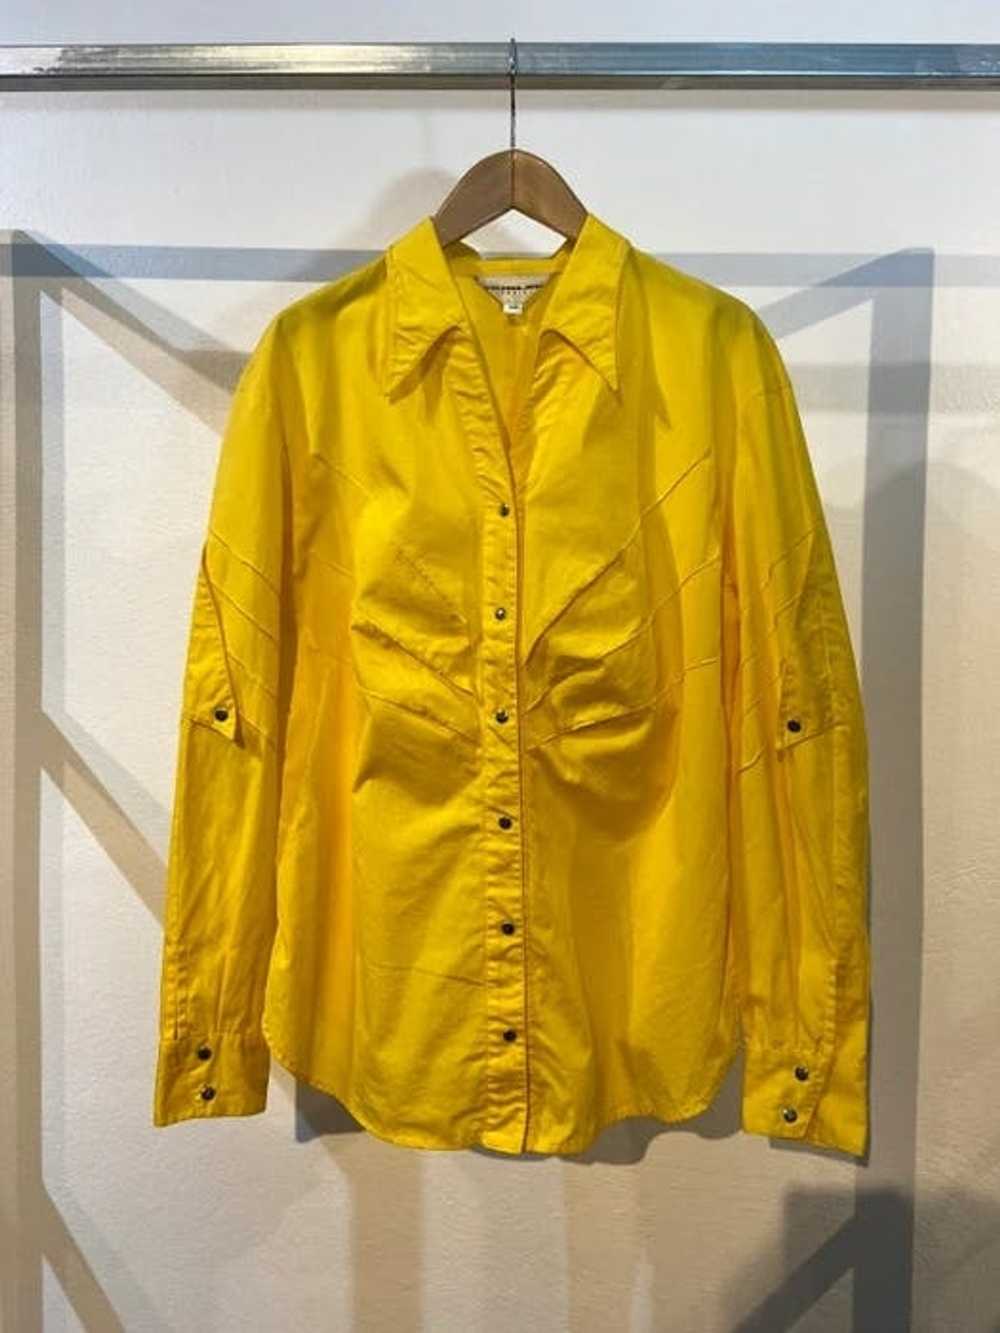 Thierry Mugler Mugler yellow Shirt - image 1